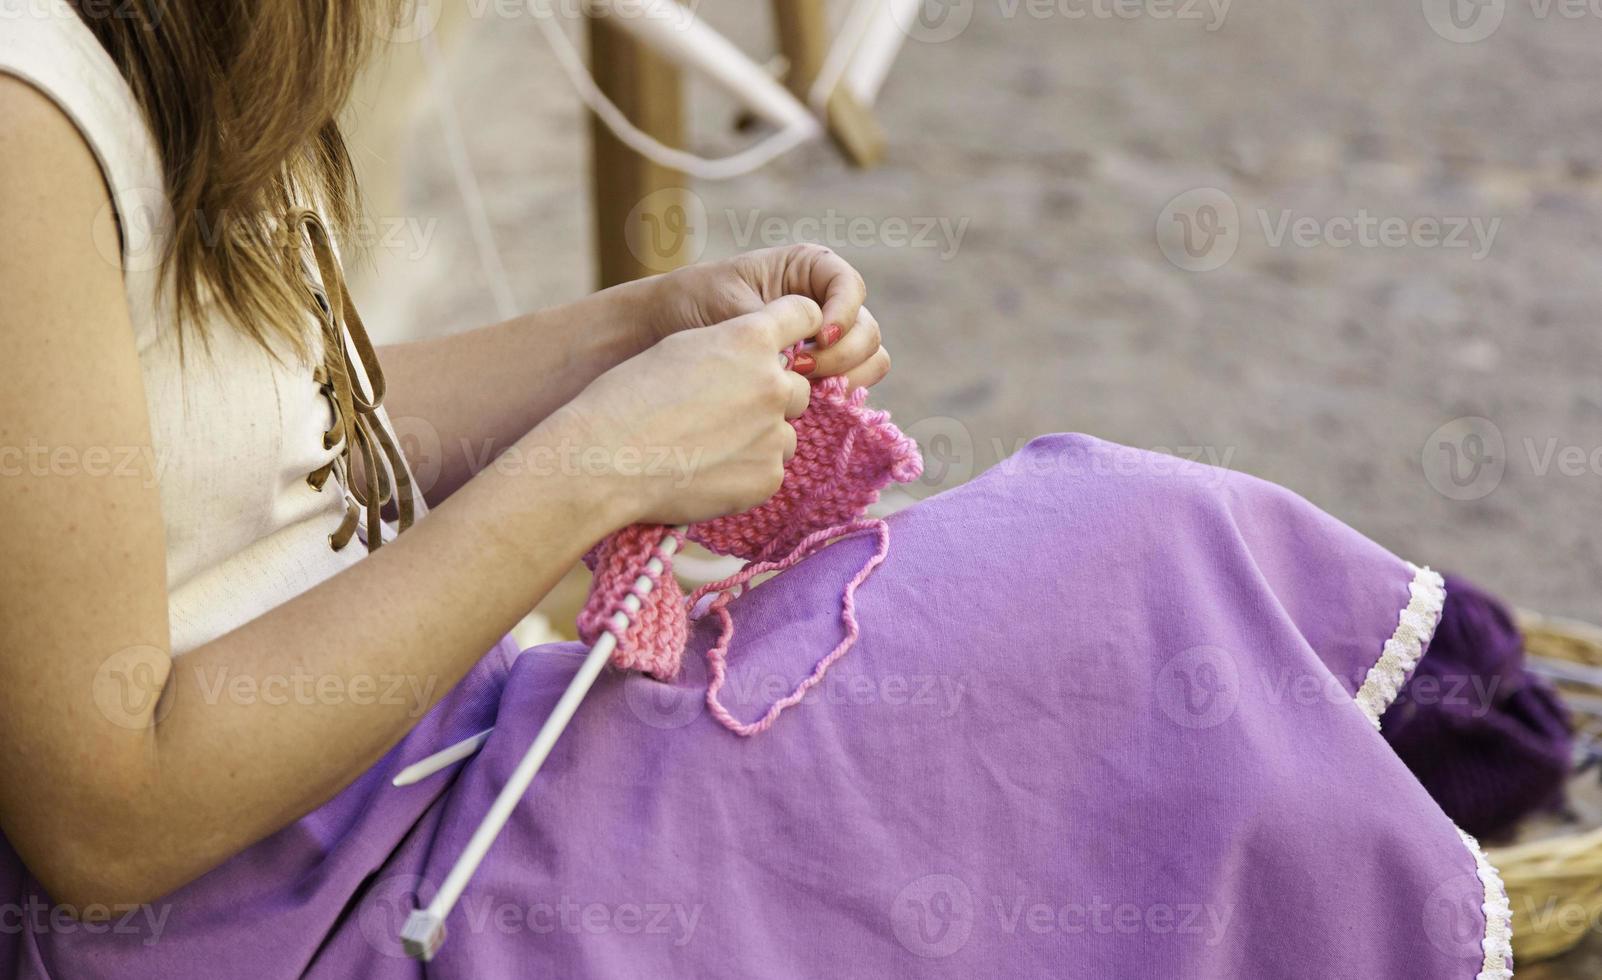 junge Frau, die Wollkleidung strickt foto